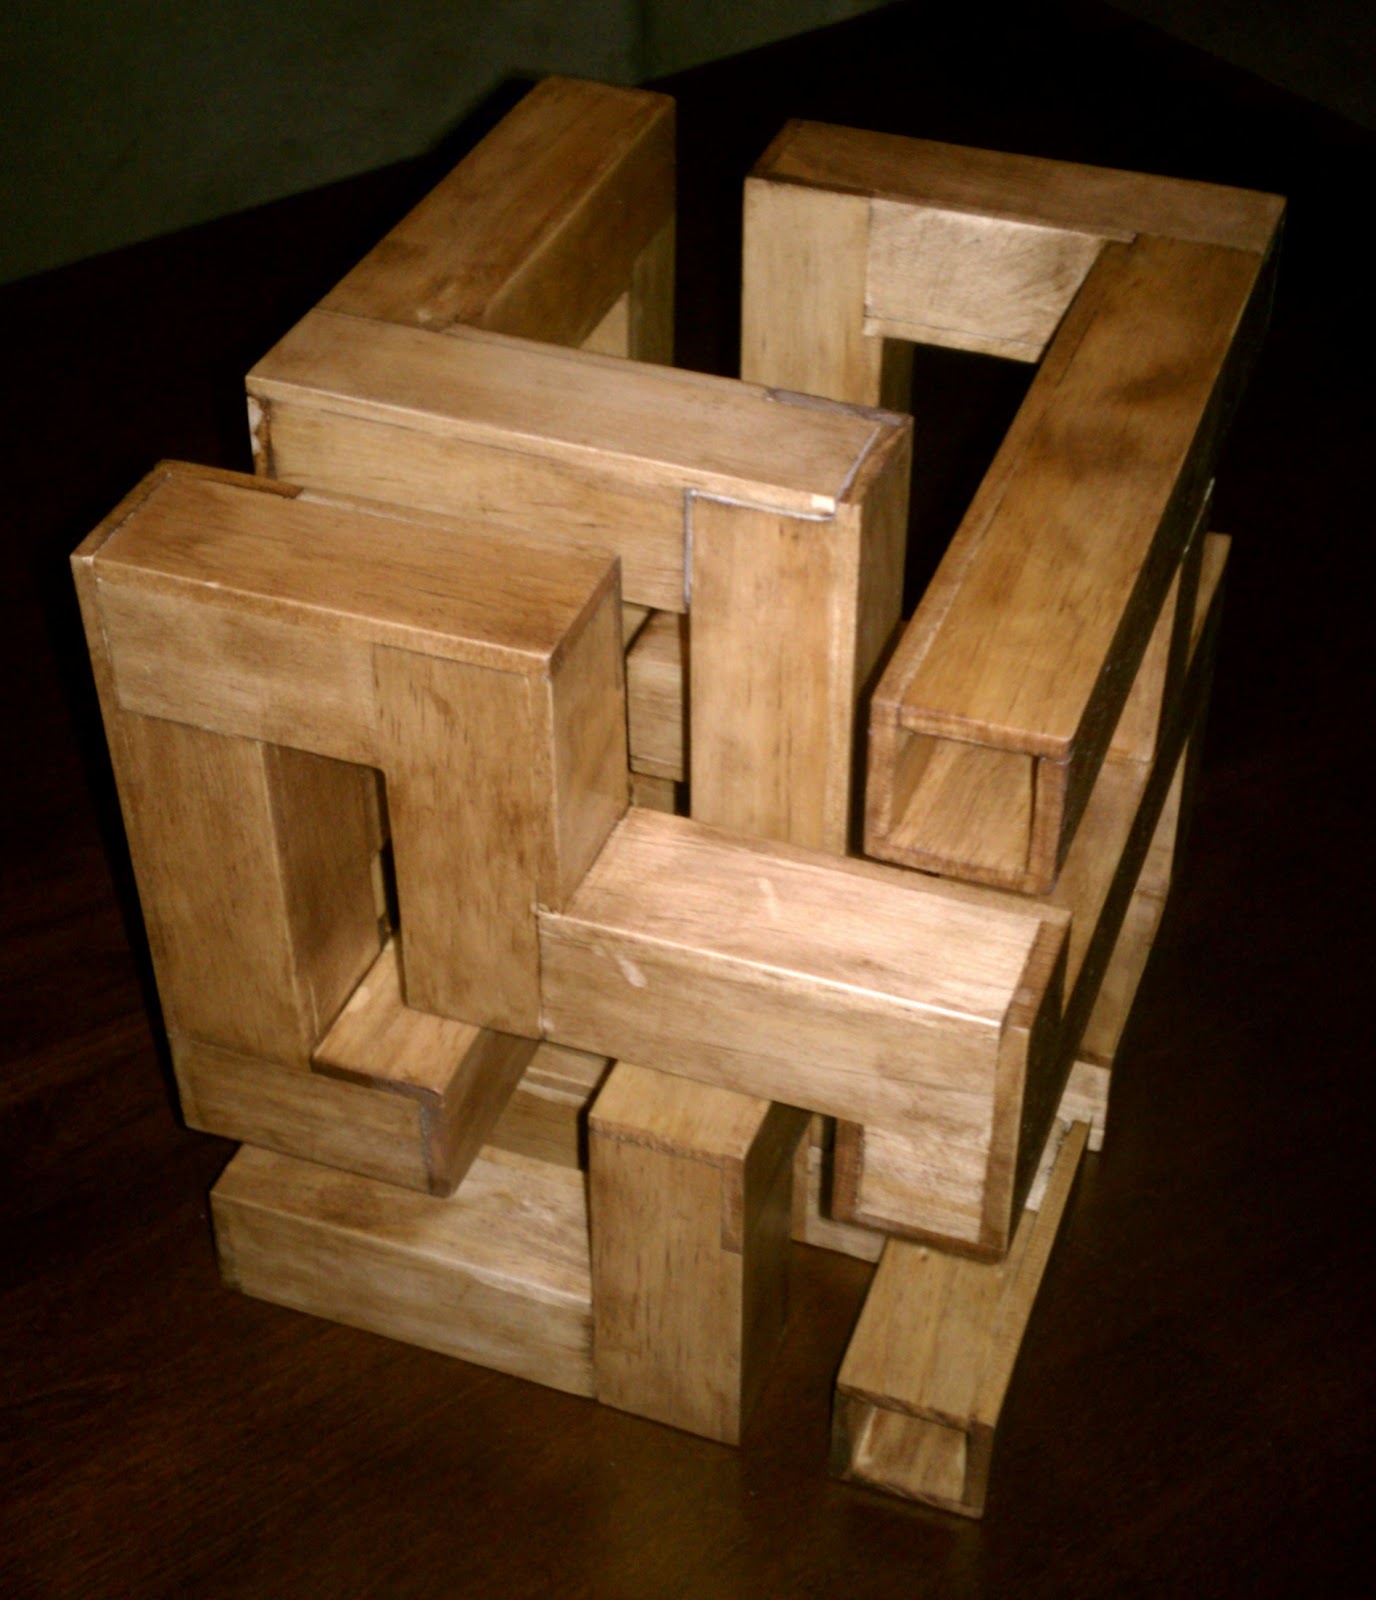 wood puzzle box designs